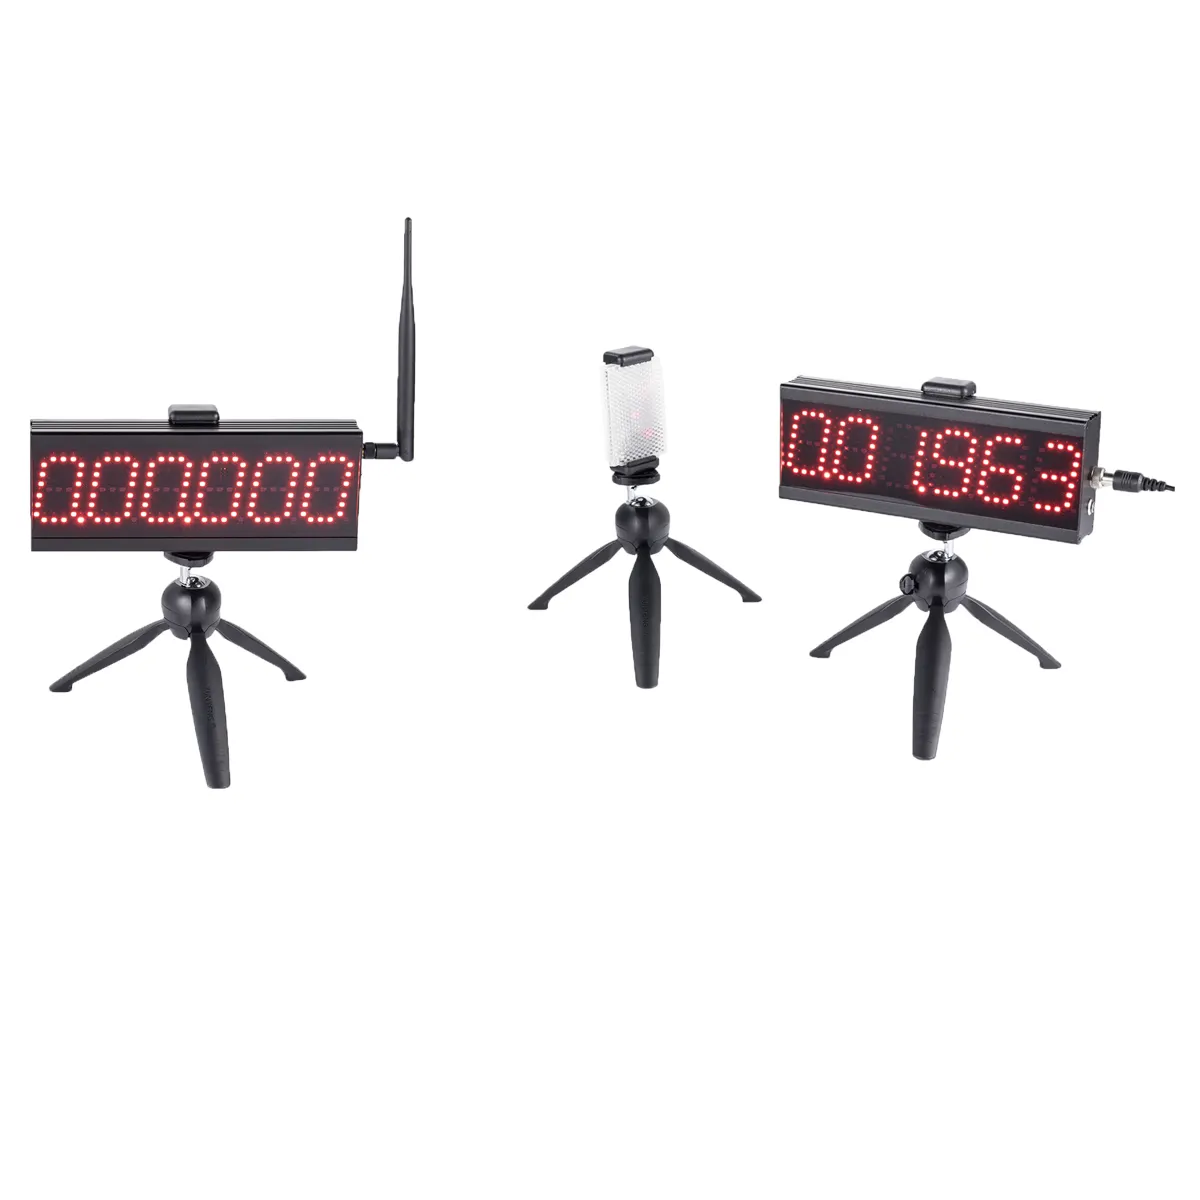 2023 S005 multilap wireless laser race sport timer for turn-back running practice racing car speed skating to display lap timer